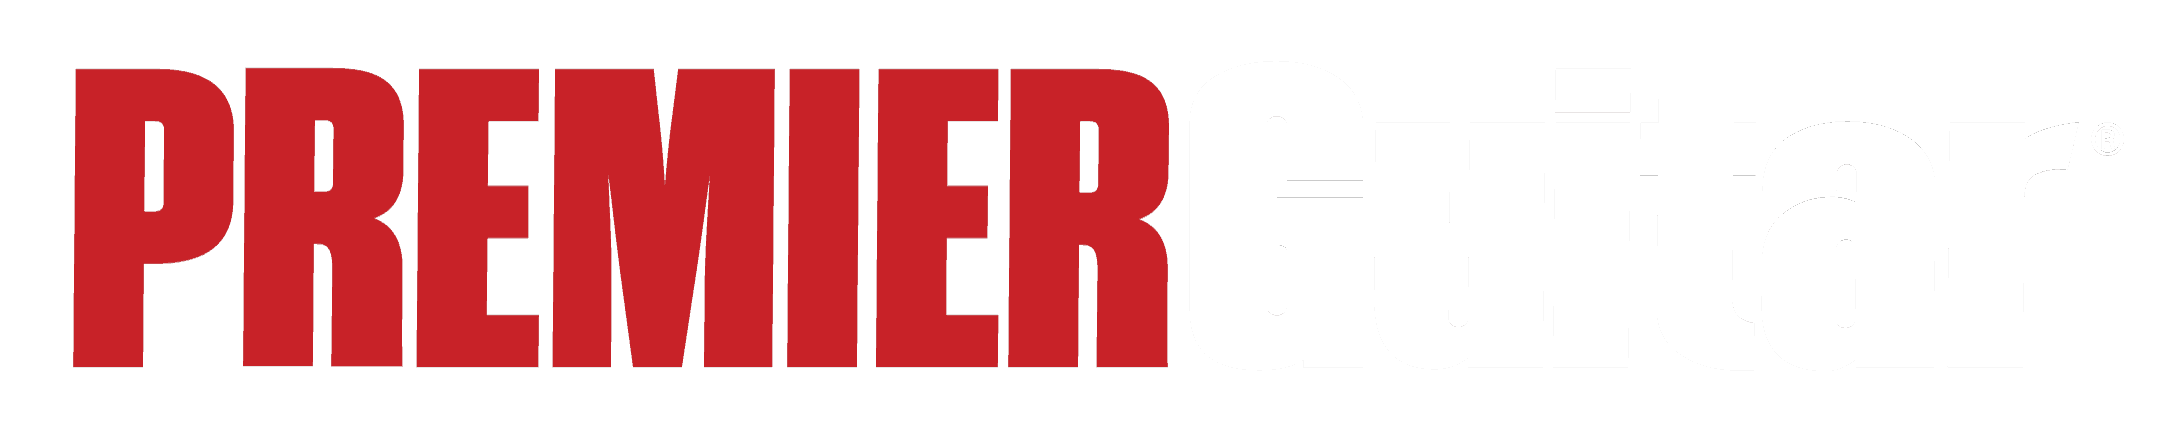 PremierGuitar_Logo_White_2017